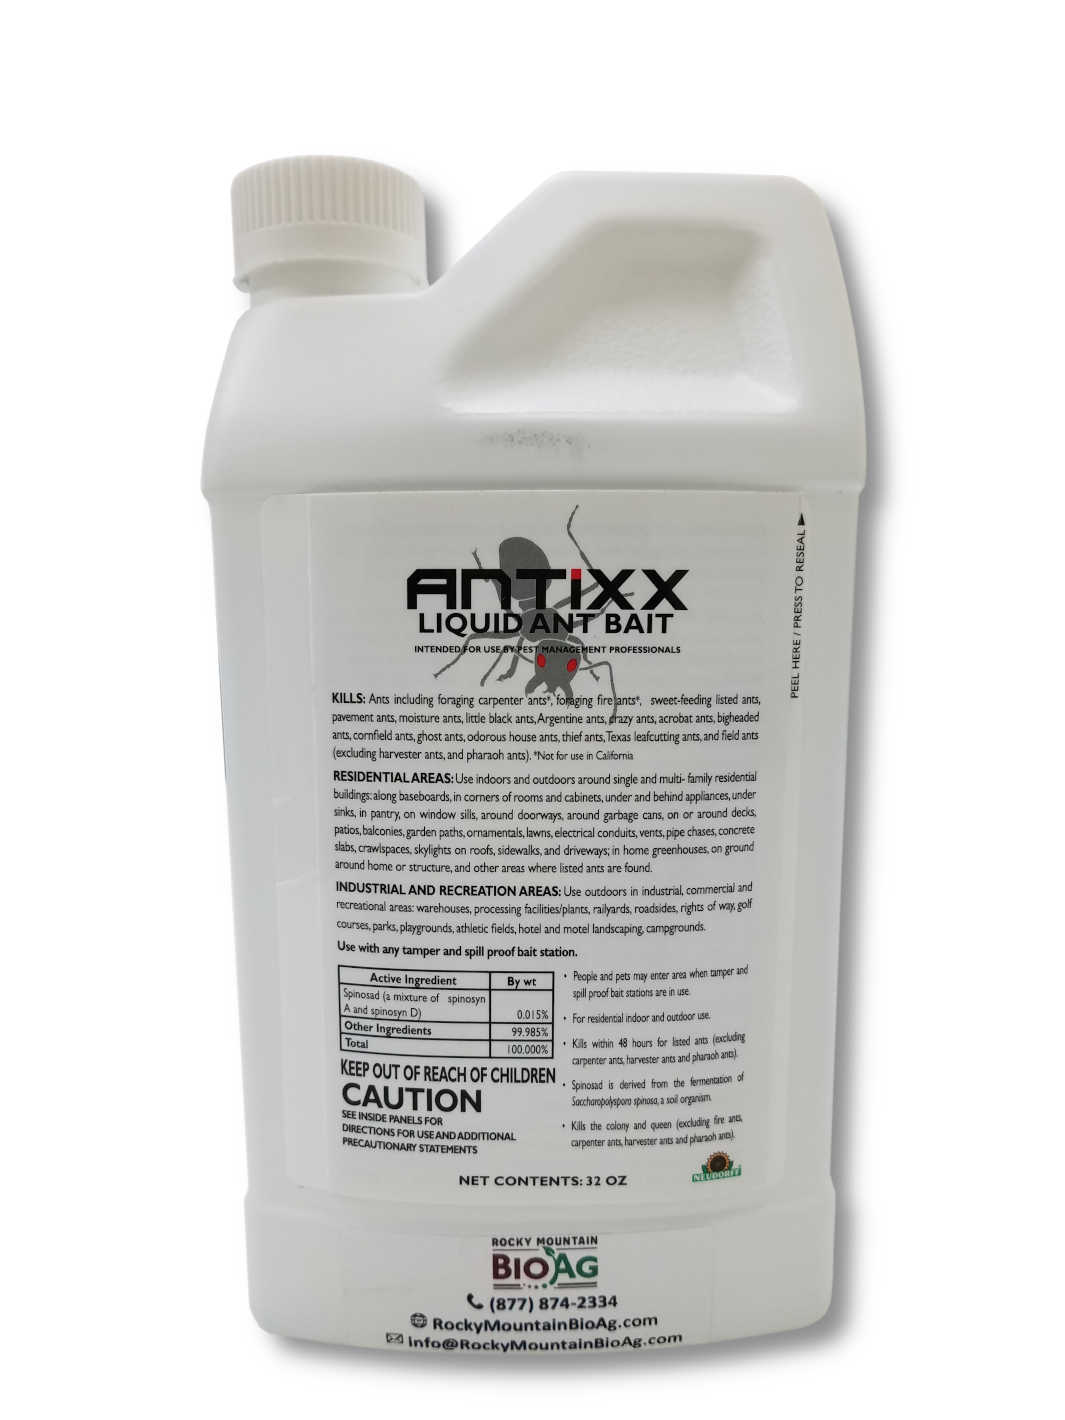 32oz Bottle of Antixx Liquid Ant Bait